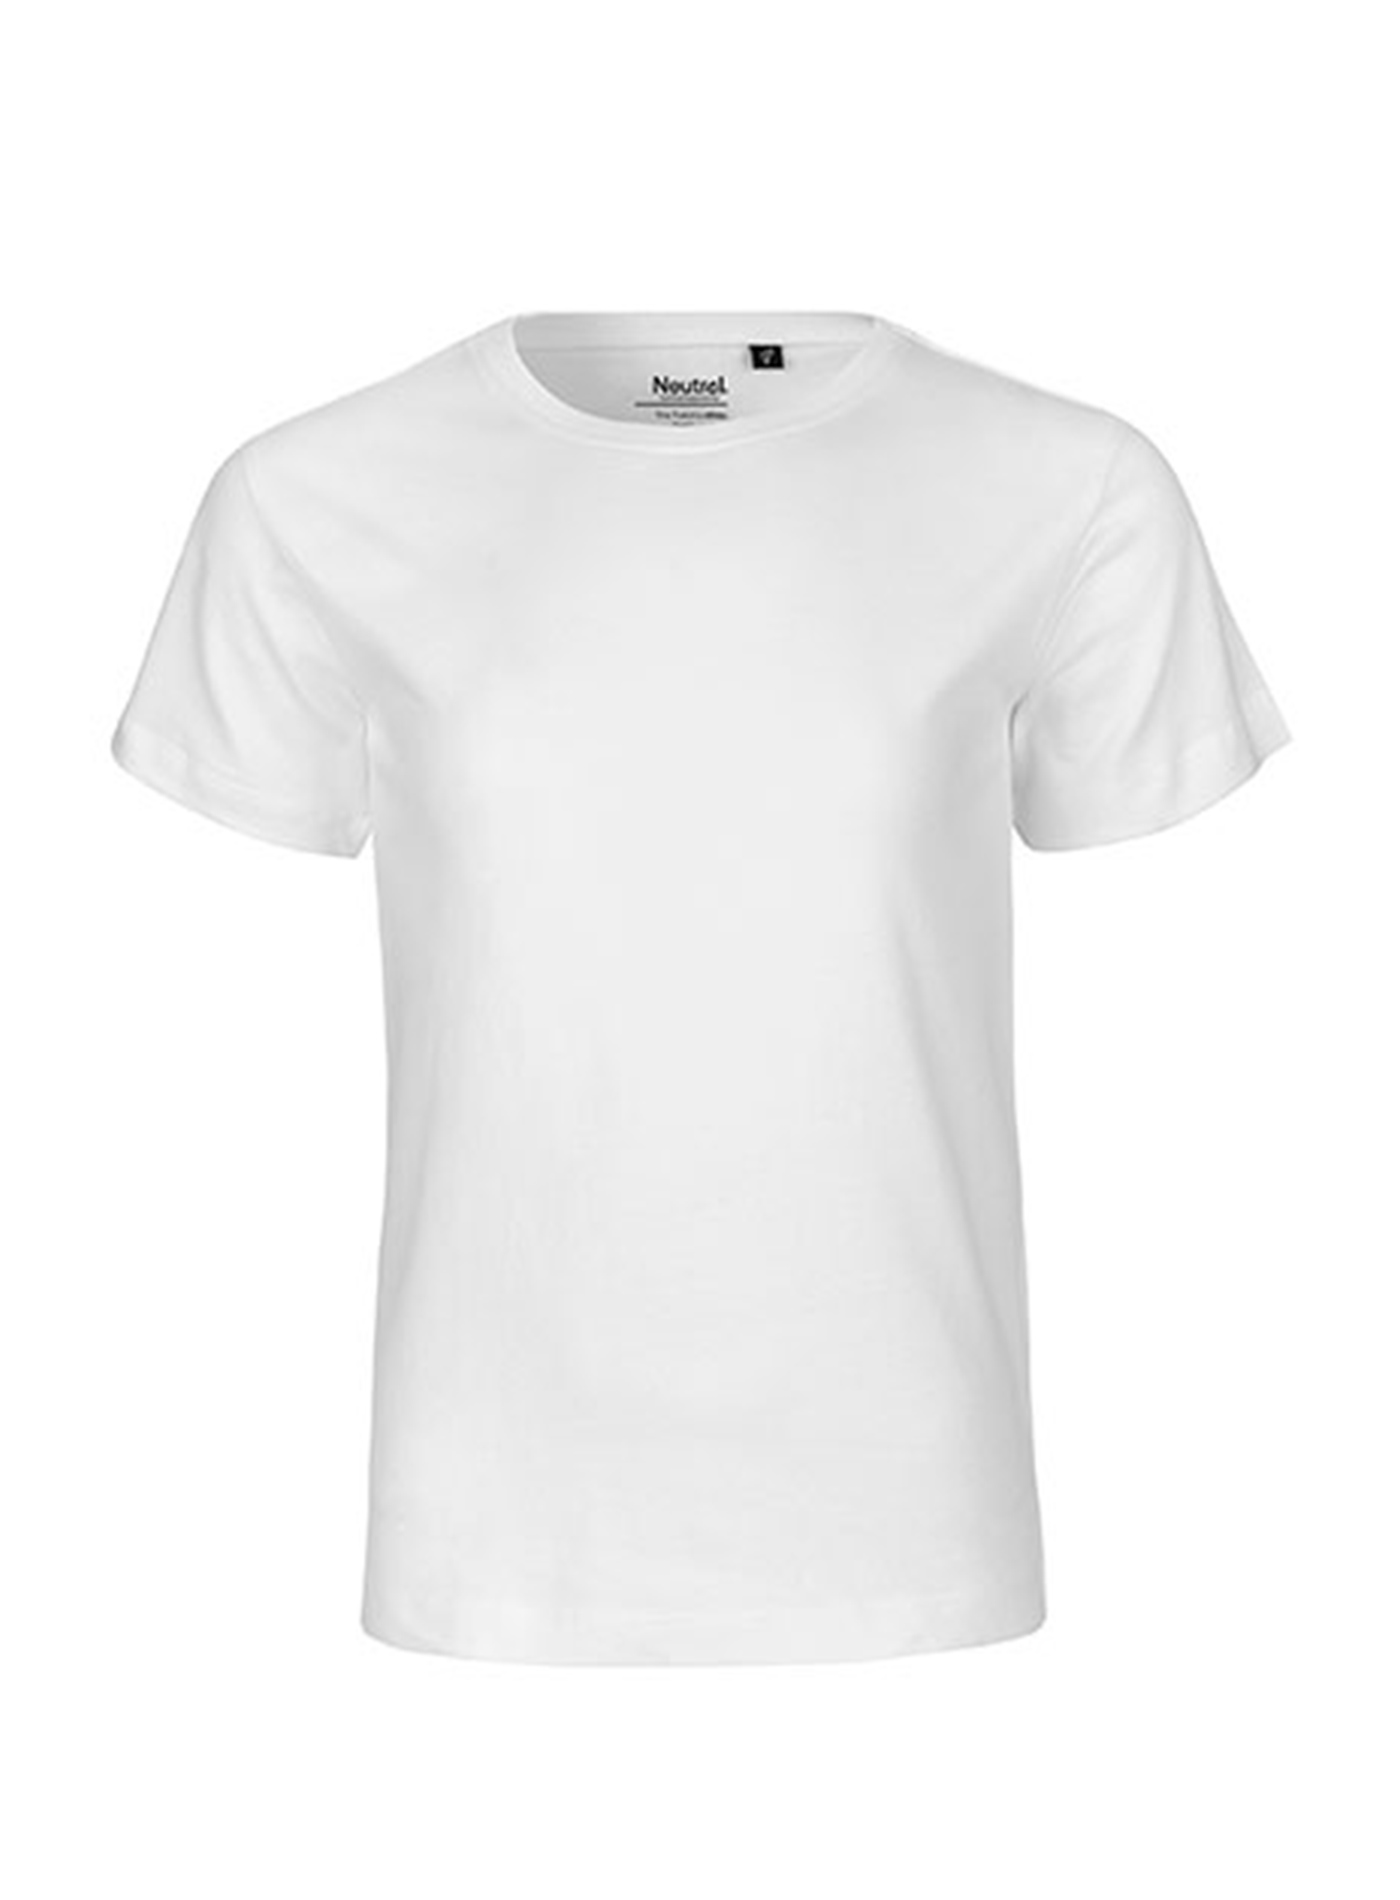 Dětské tričko Neutral - Bílá 128 (7-8)